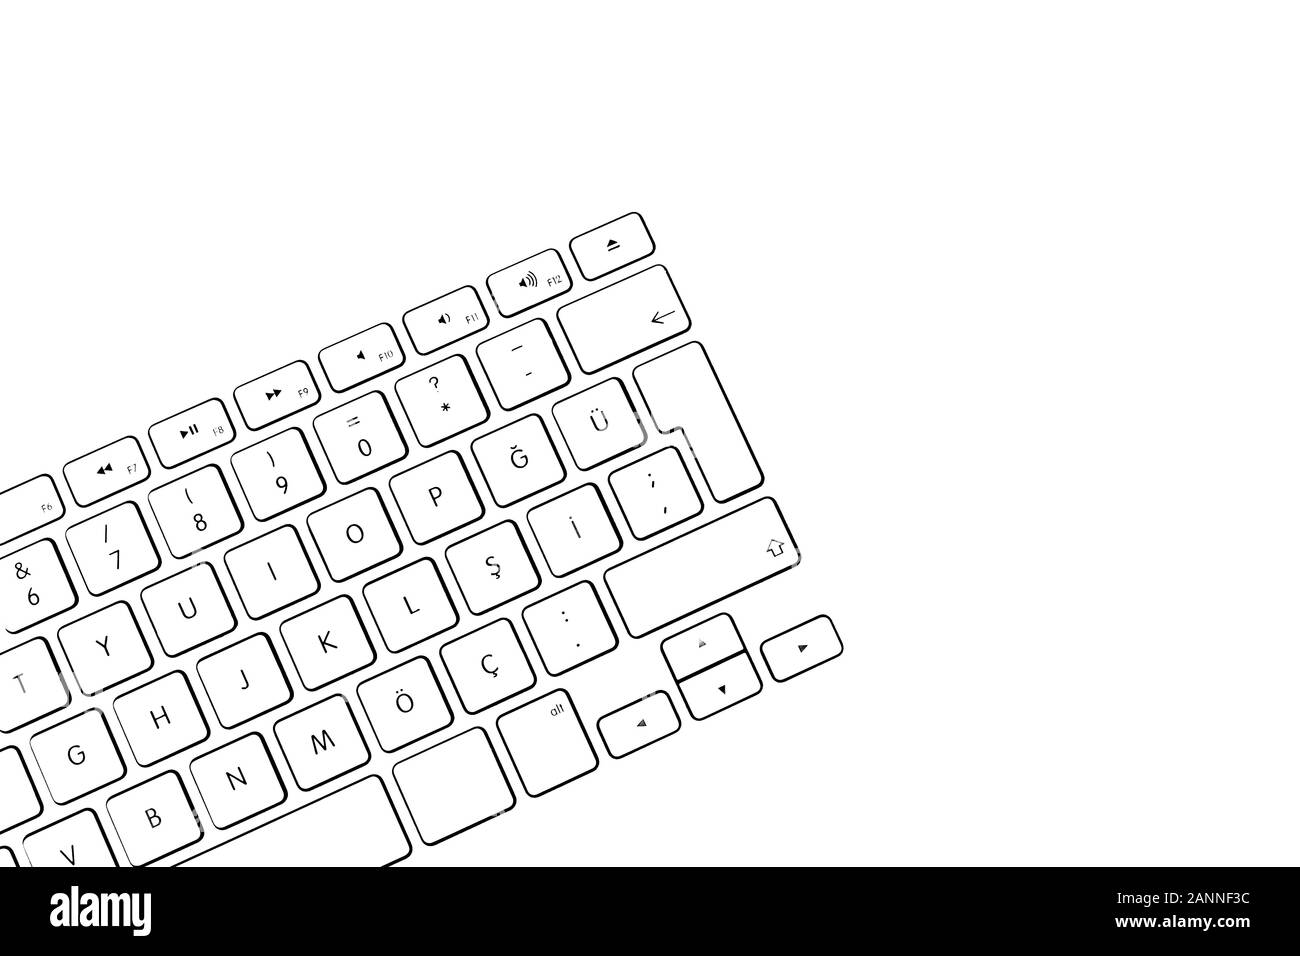 White computer keyboard and keys Stock Photo